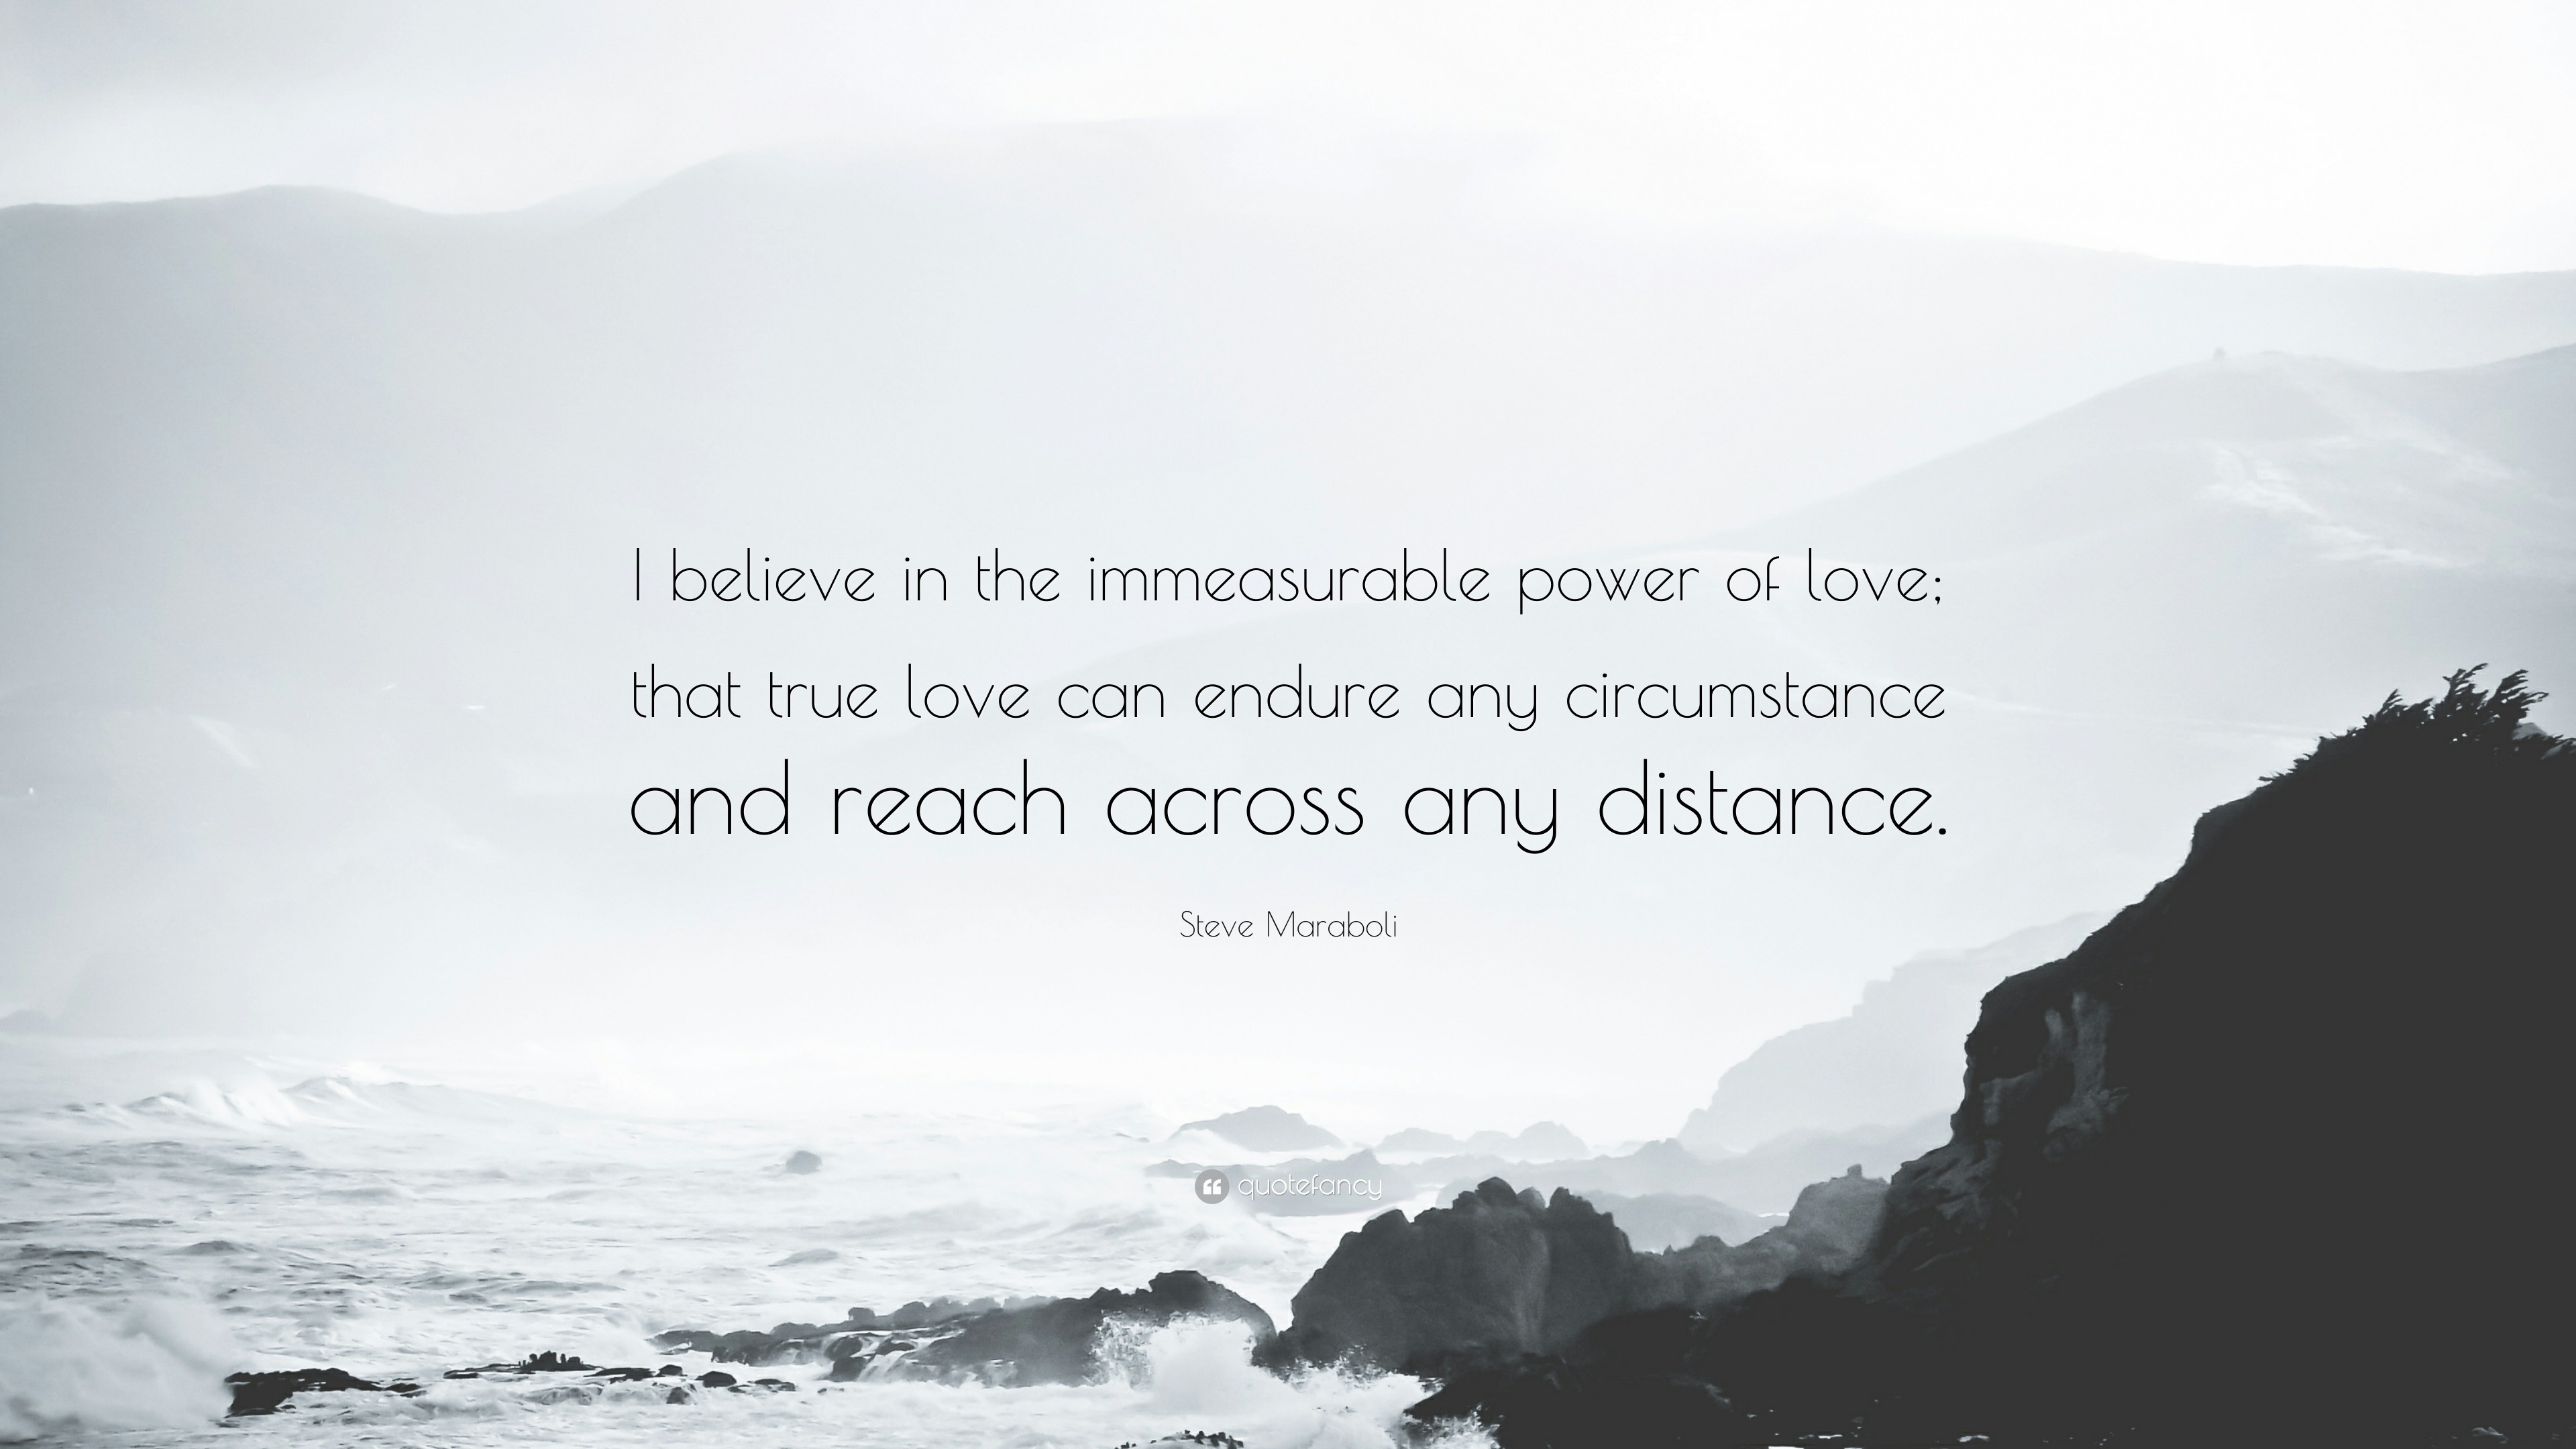 Steve Maraboli Quote “I believe in the immeasurable power of love that true